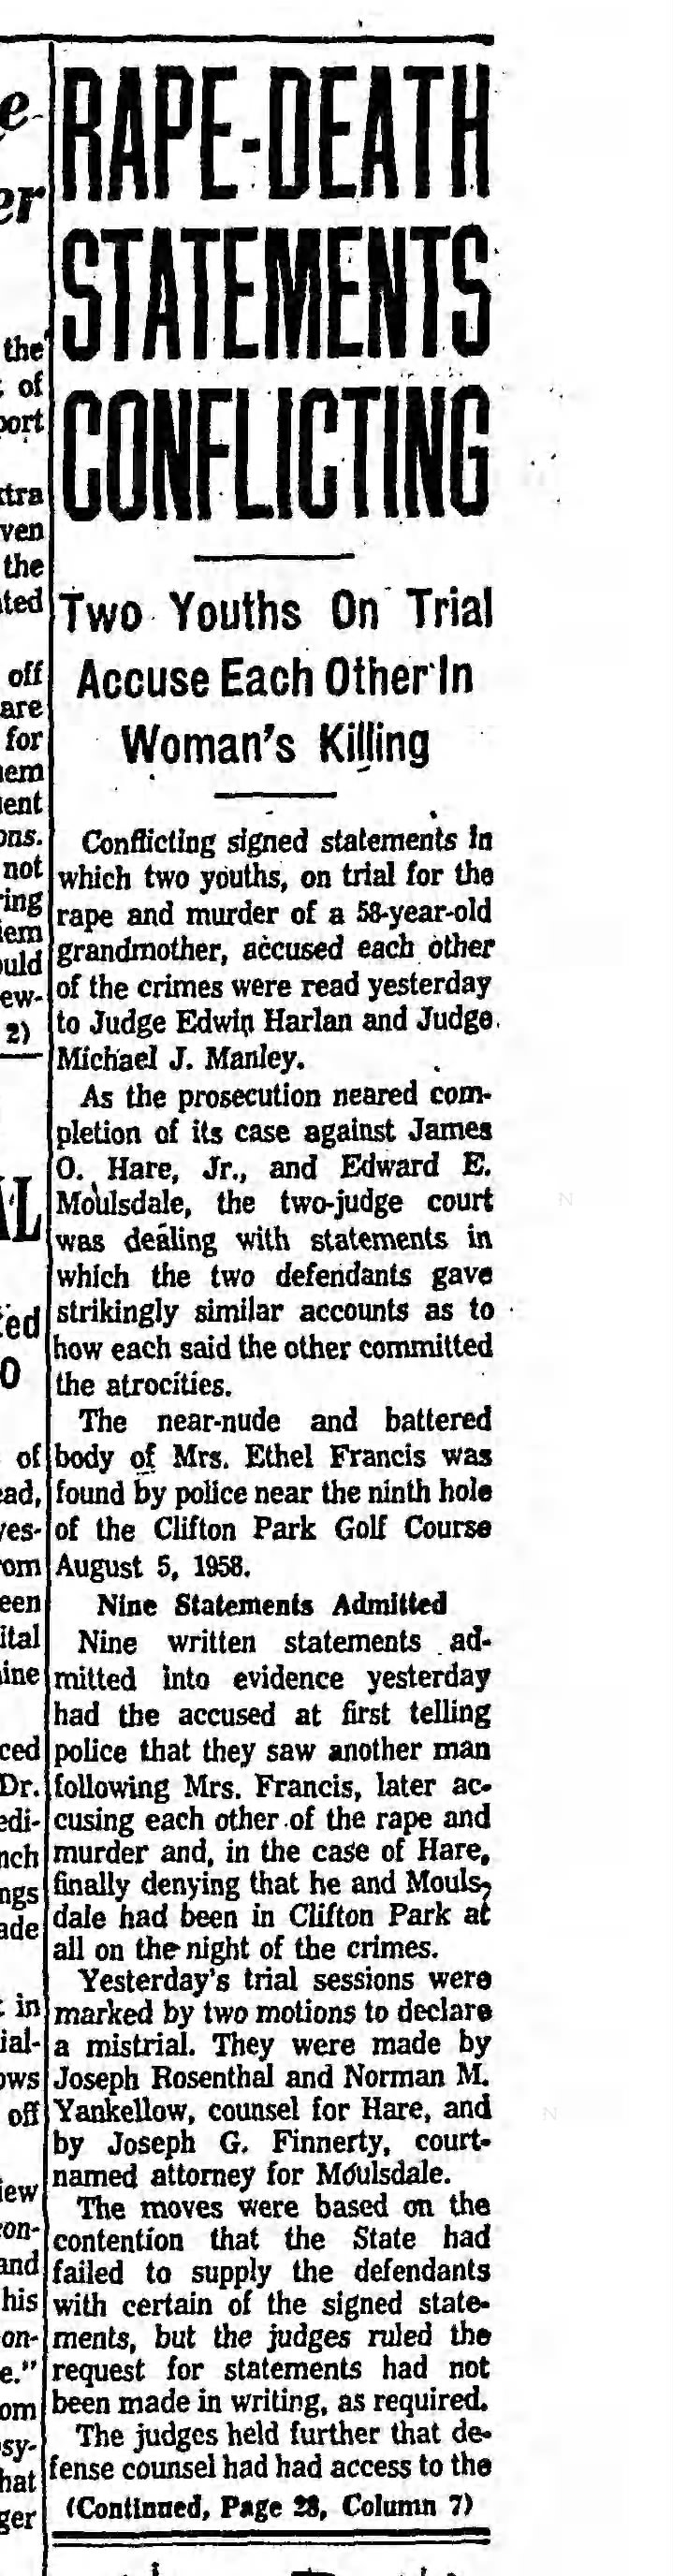 Rape-Death Statements Conflicting Baltimore Sun Dec. 9, 1959 1 of 2